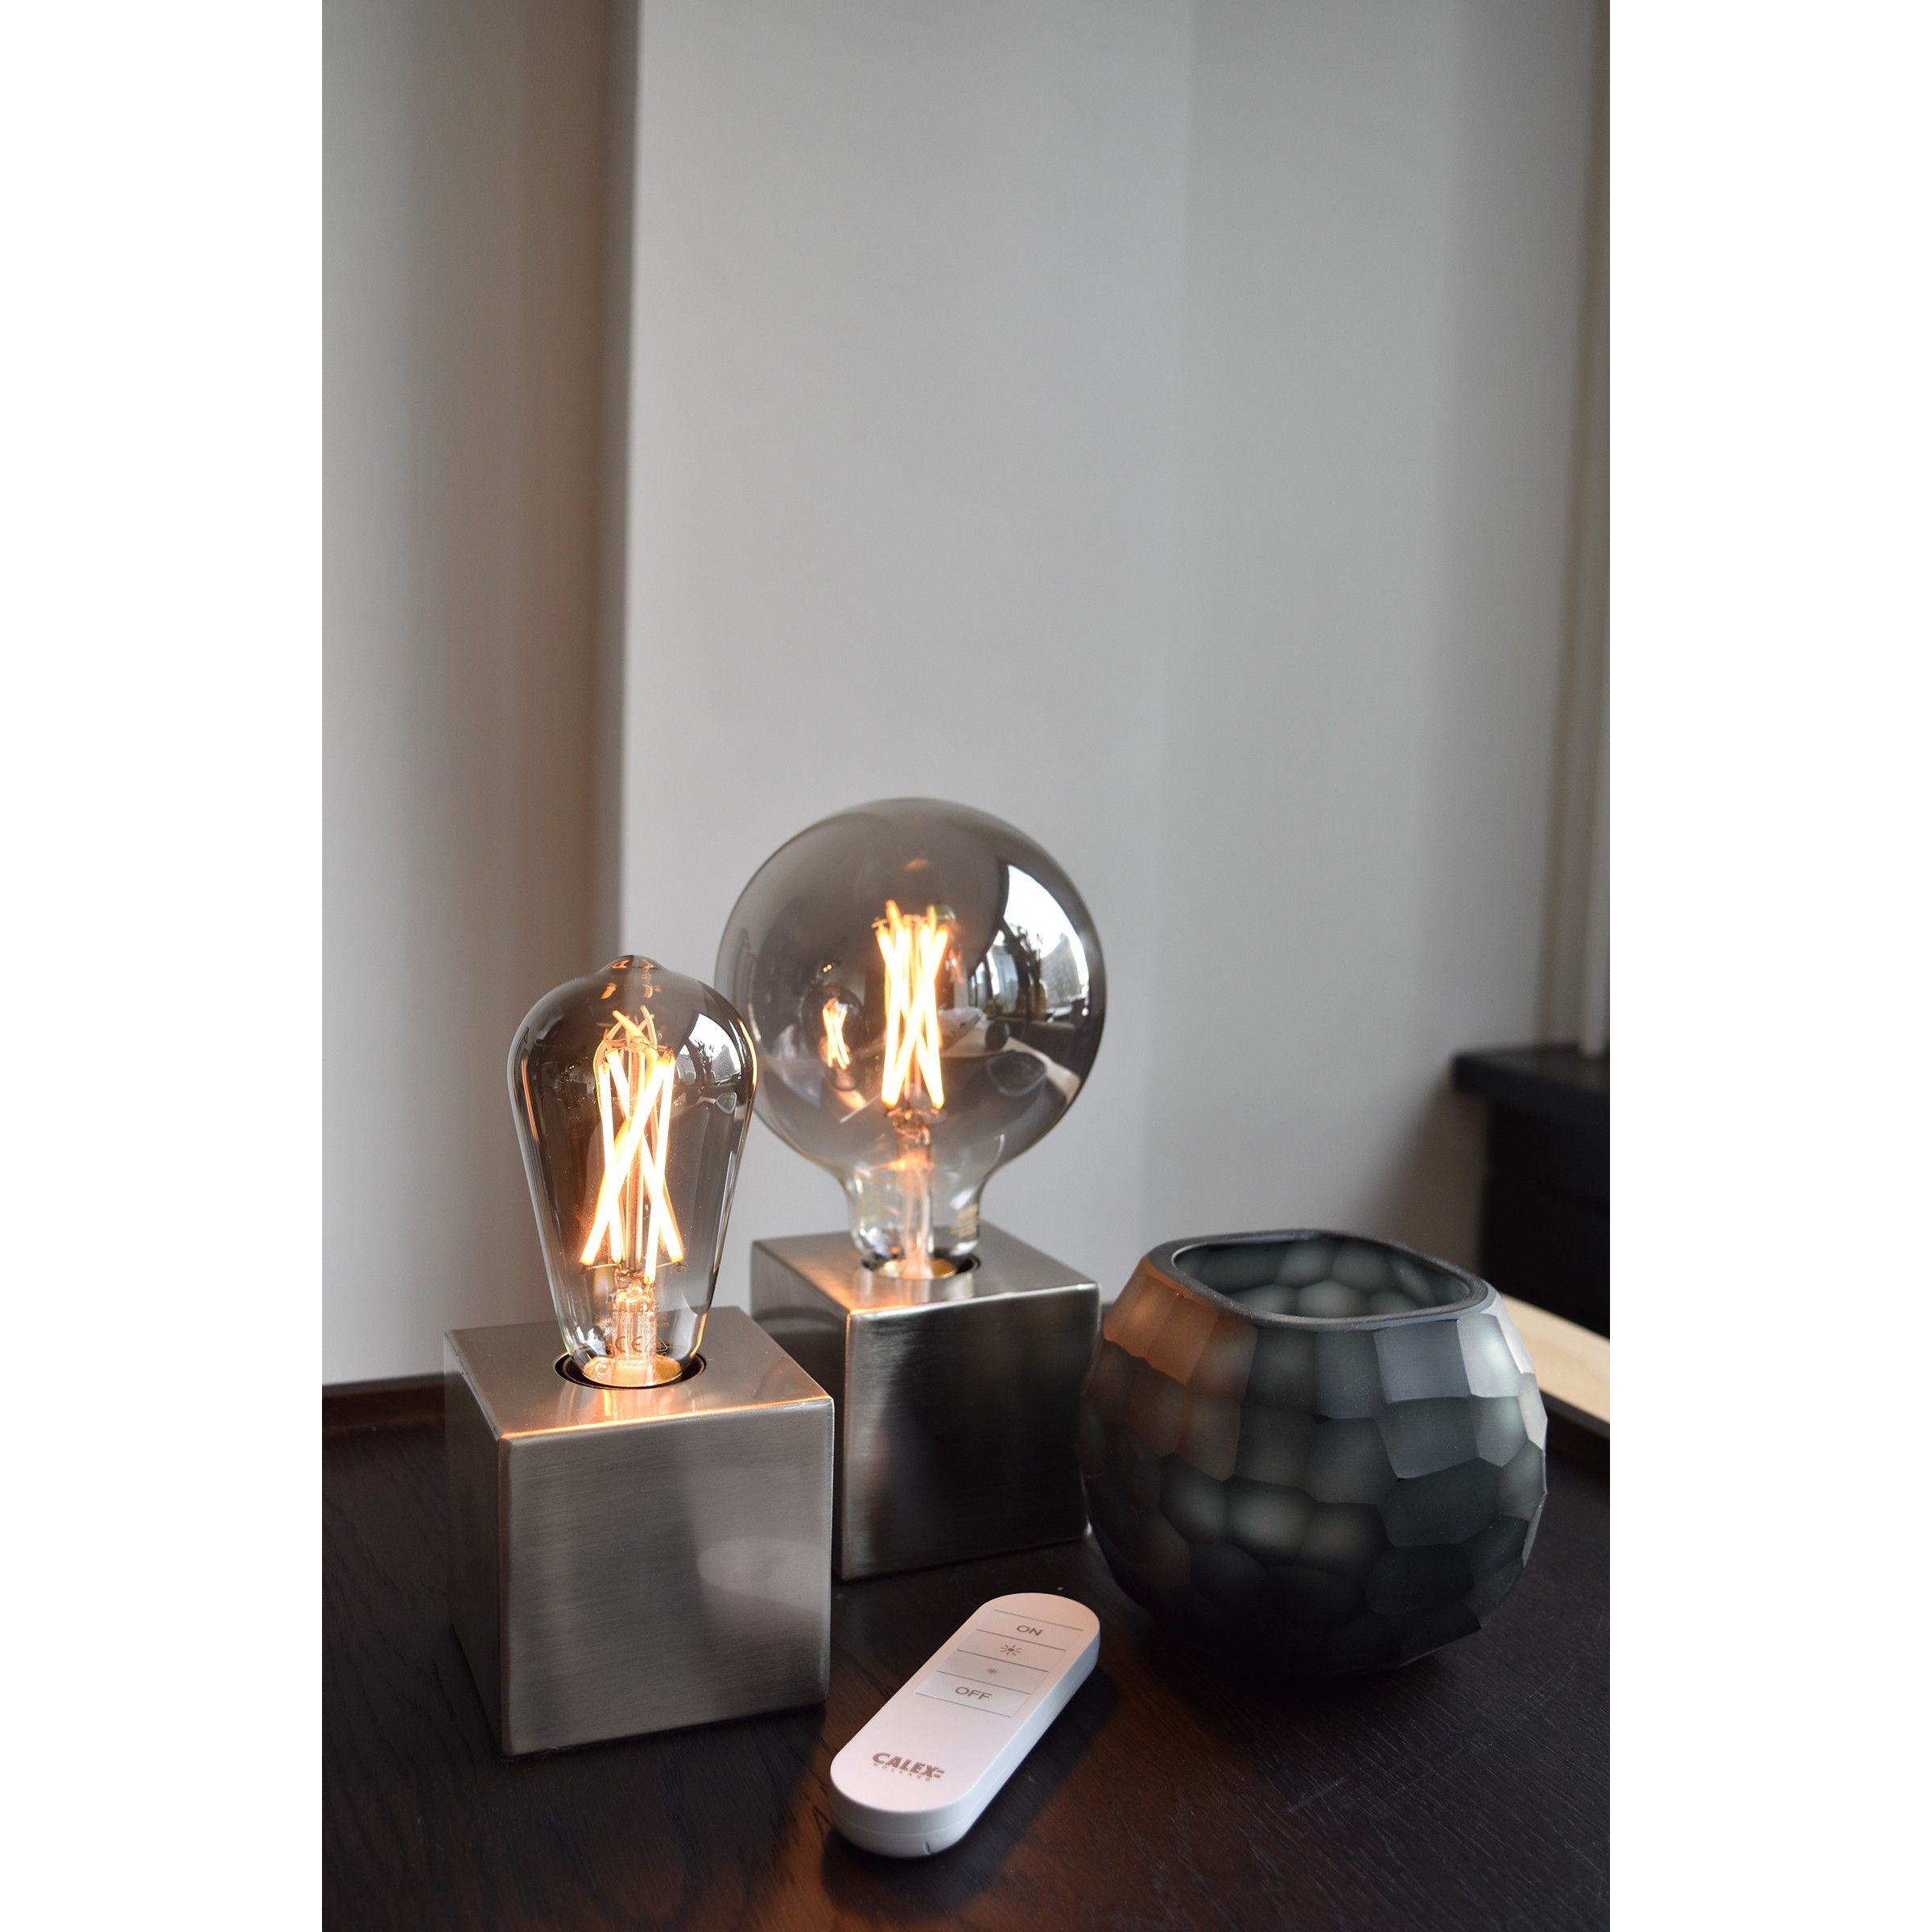 eetbaar gekruld strand Calex Smart LED lamp - Ø 6,4 x 14 cm - E27 - 7W - dimfunctie via app - 1800  tot 3000K - white ambiance - gerookt | Lichtkoning